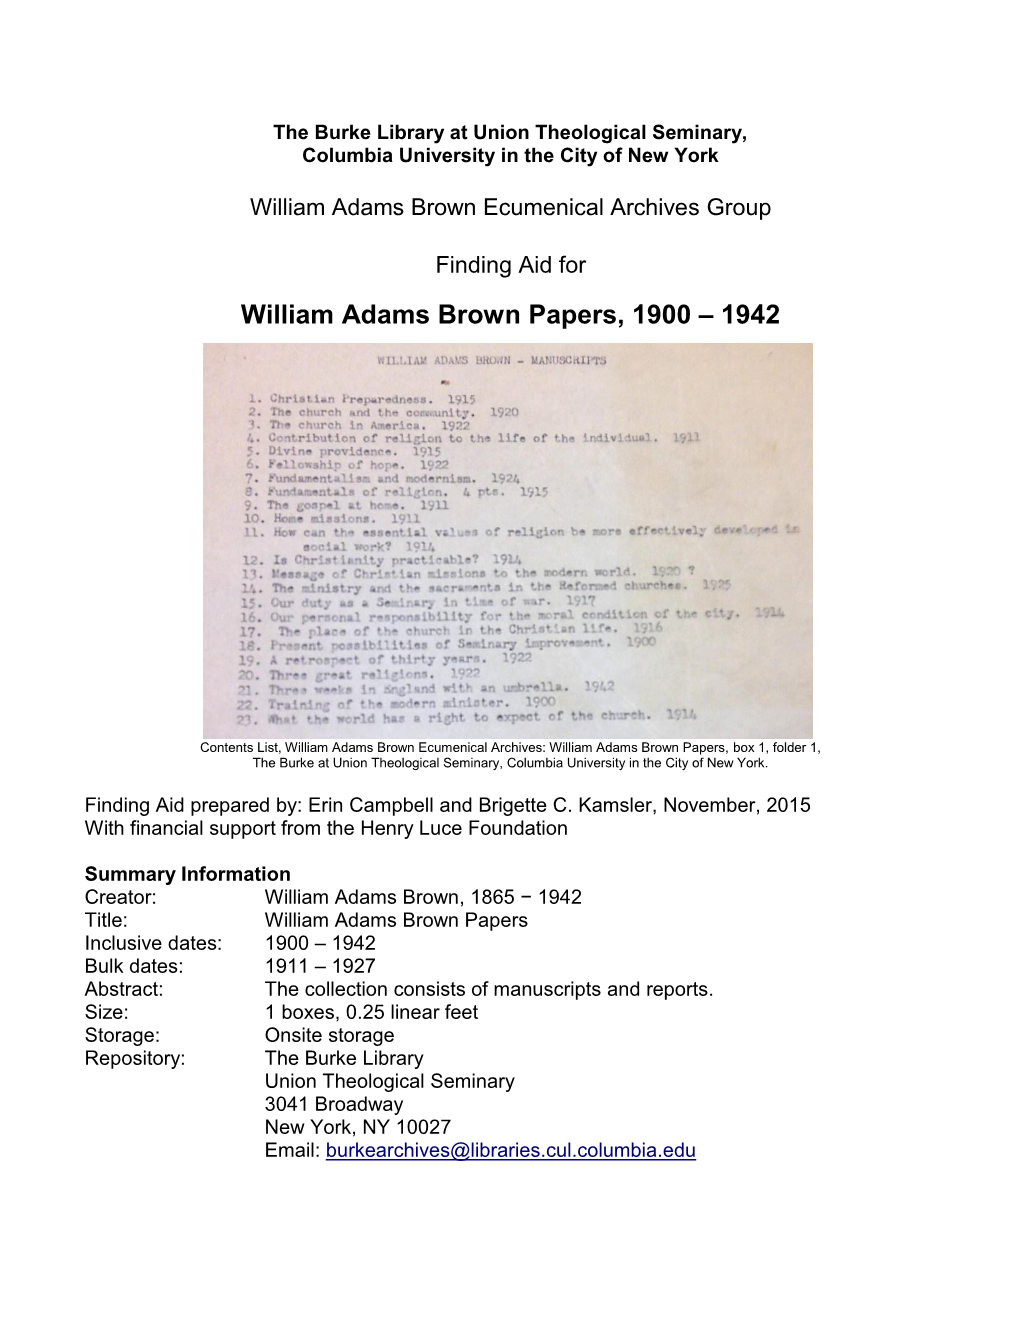 William Adams Brown Papers, 1900-1942 2